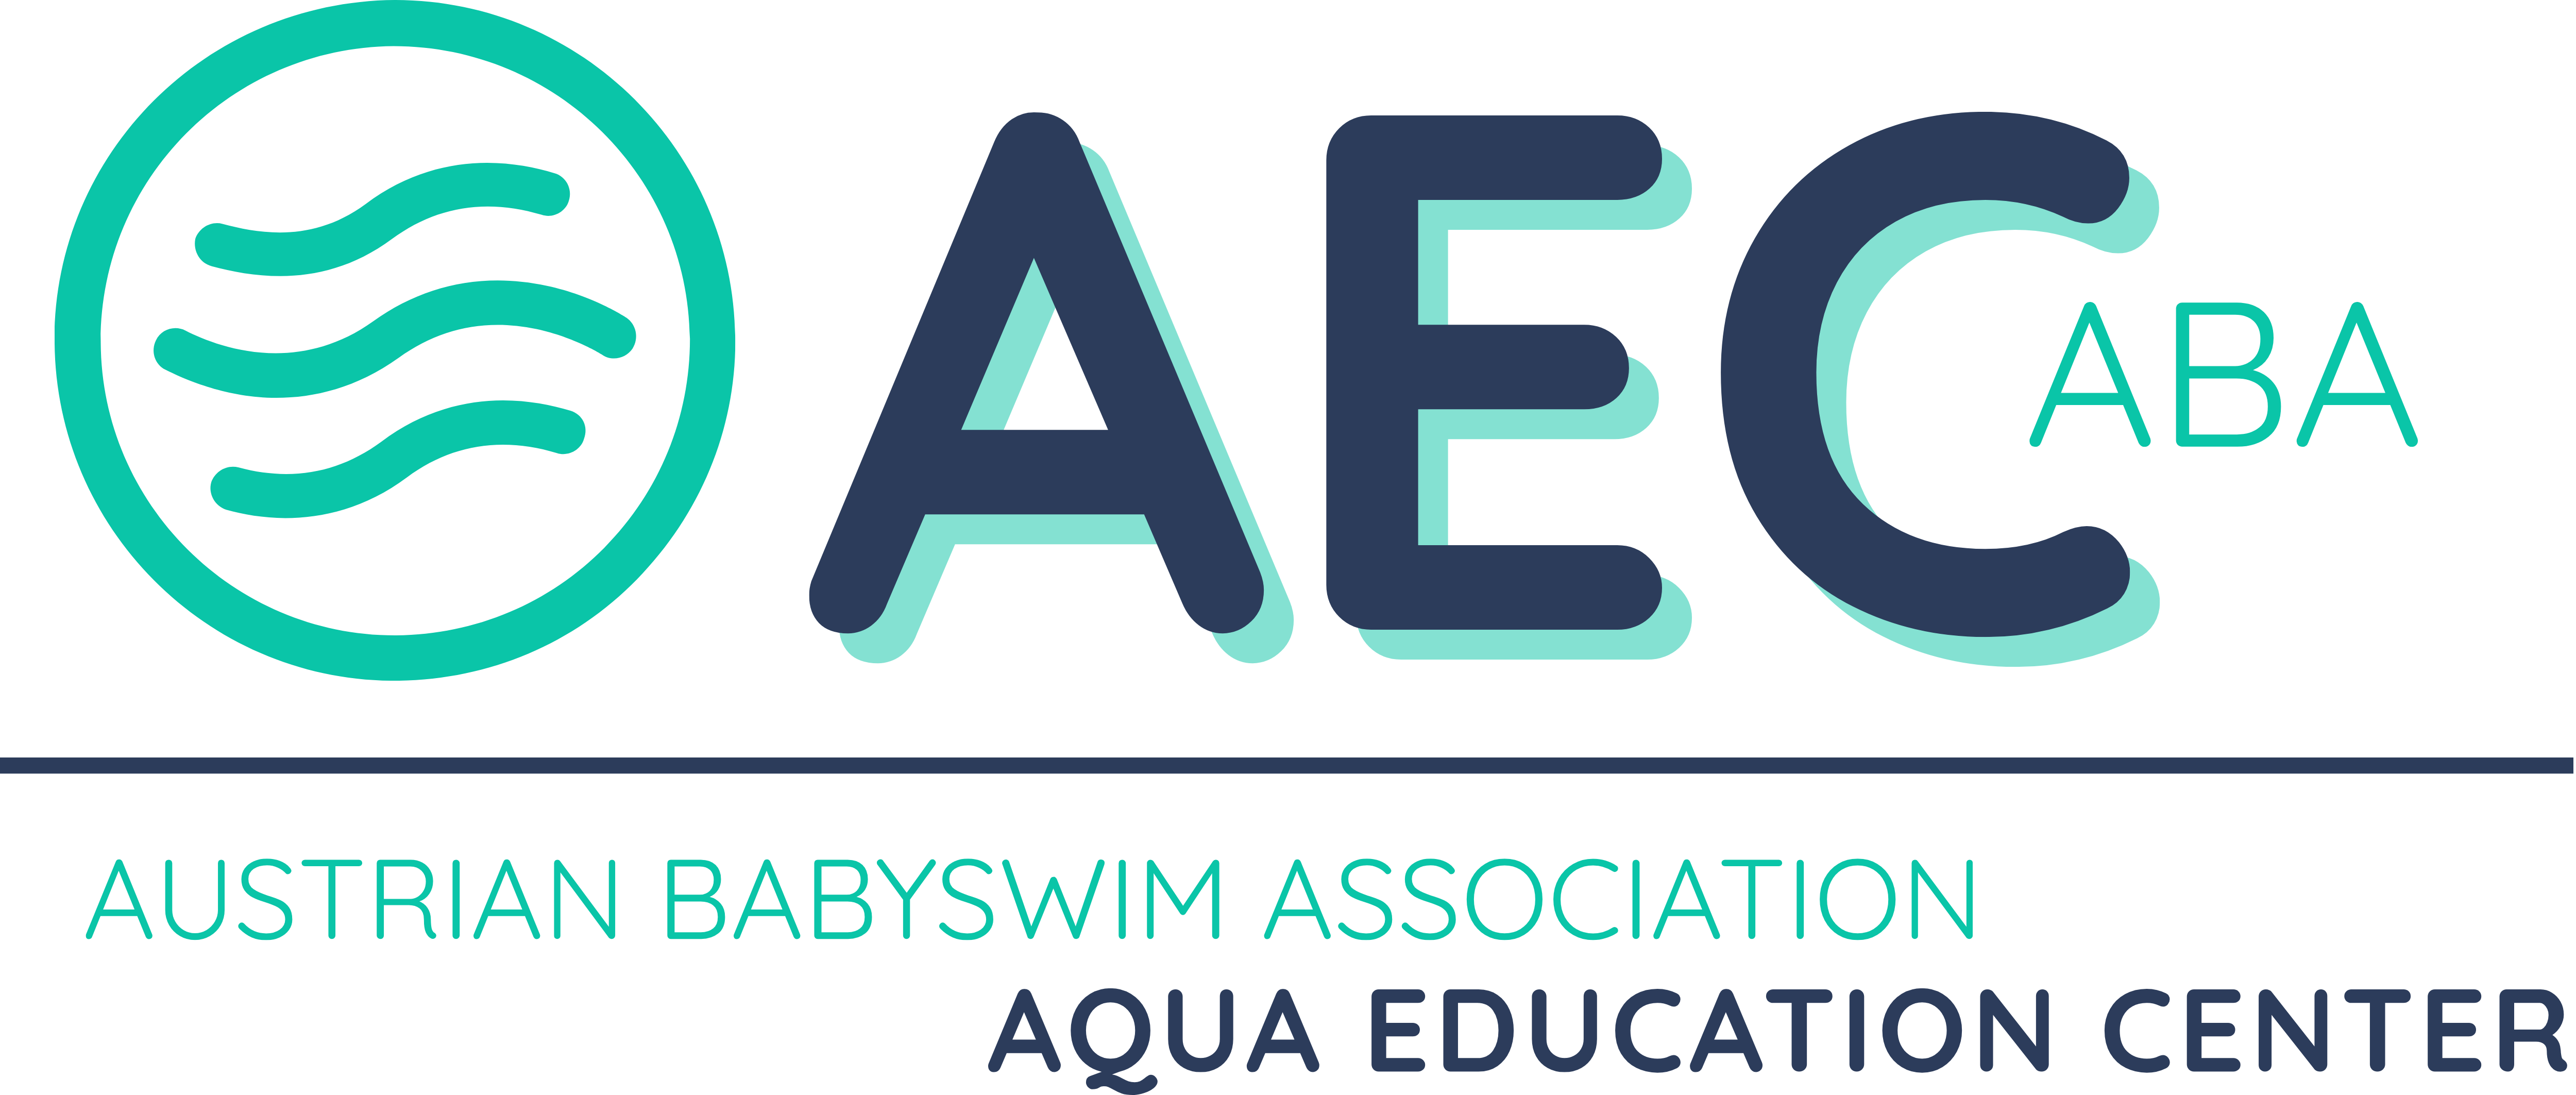 ABA Aqua Education Center